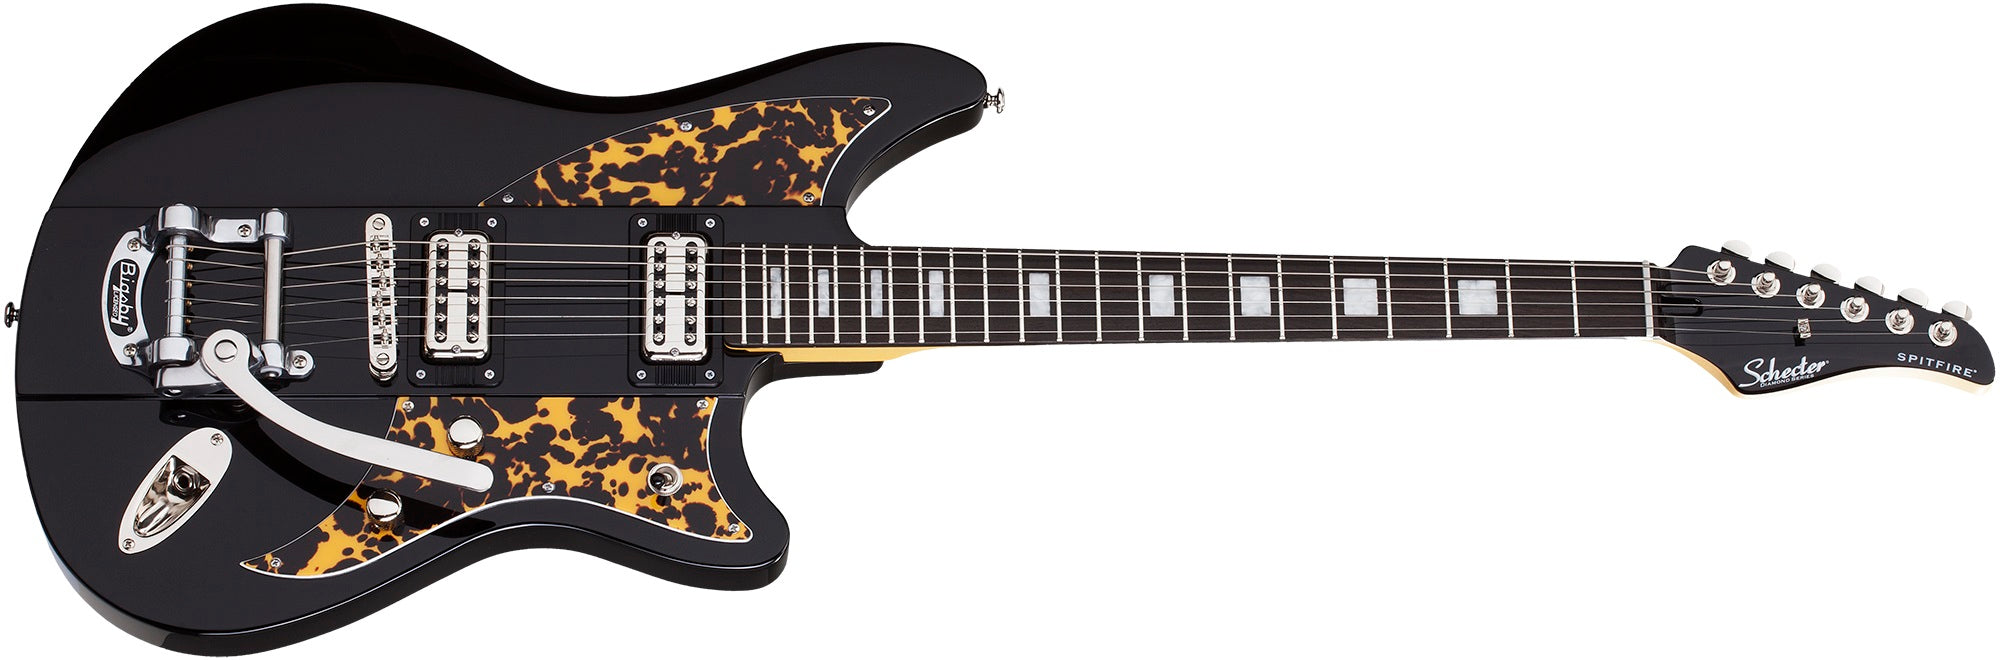 Schecter Spitfire Solid-Body Electric Guitar, Black Leopard 298-SHC